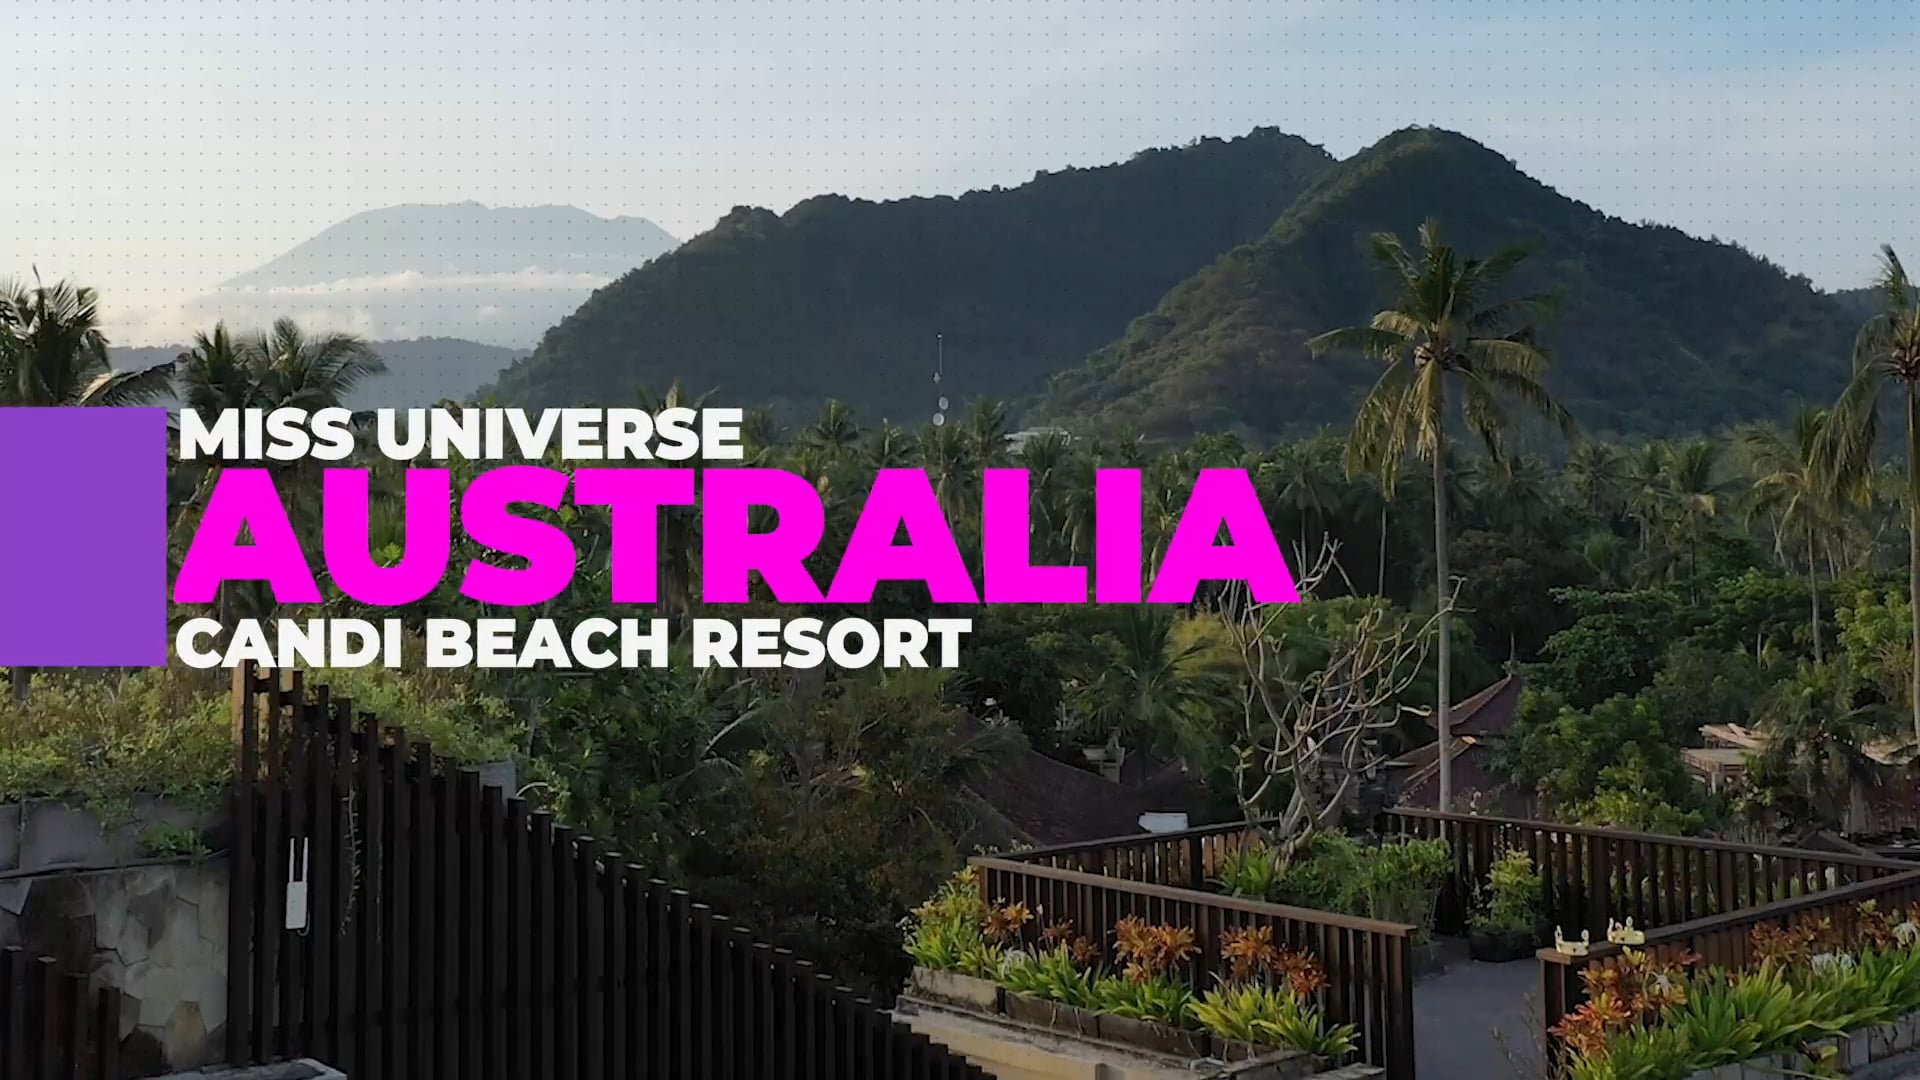 Miss Universe Australia @ Candi Beach Resort